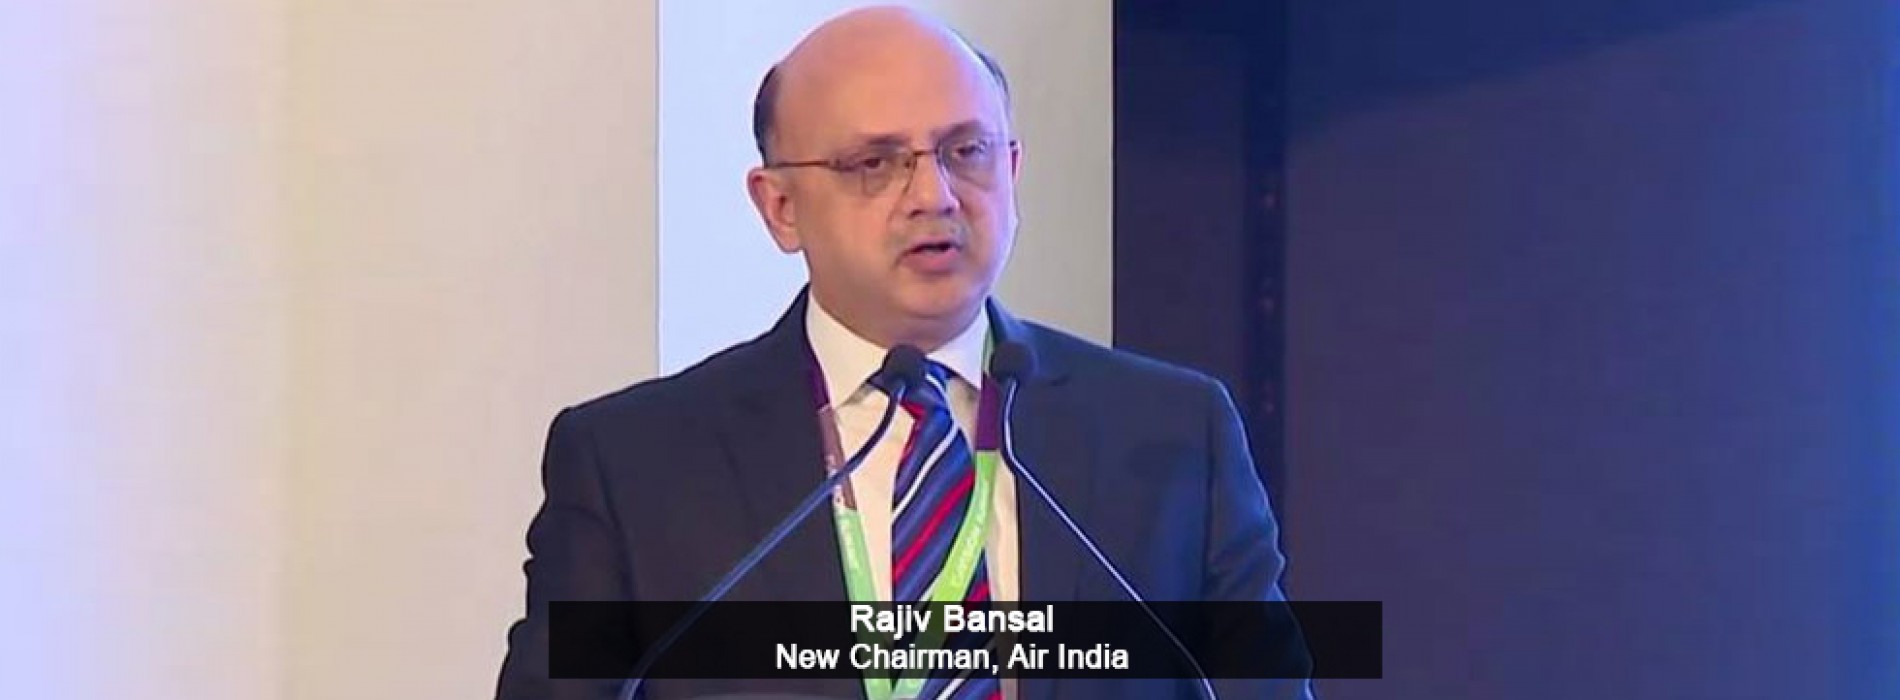 Rajiv Bansal is the new Air India CMD